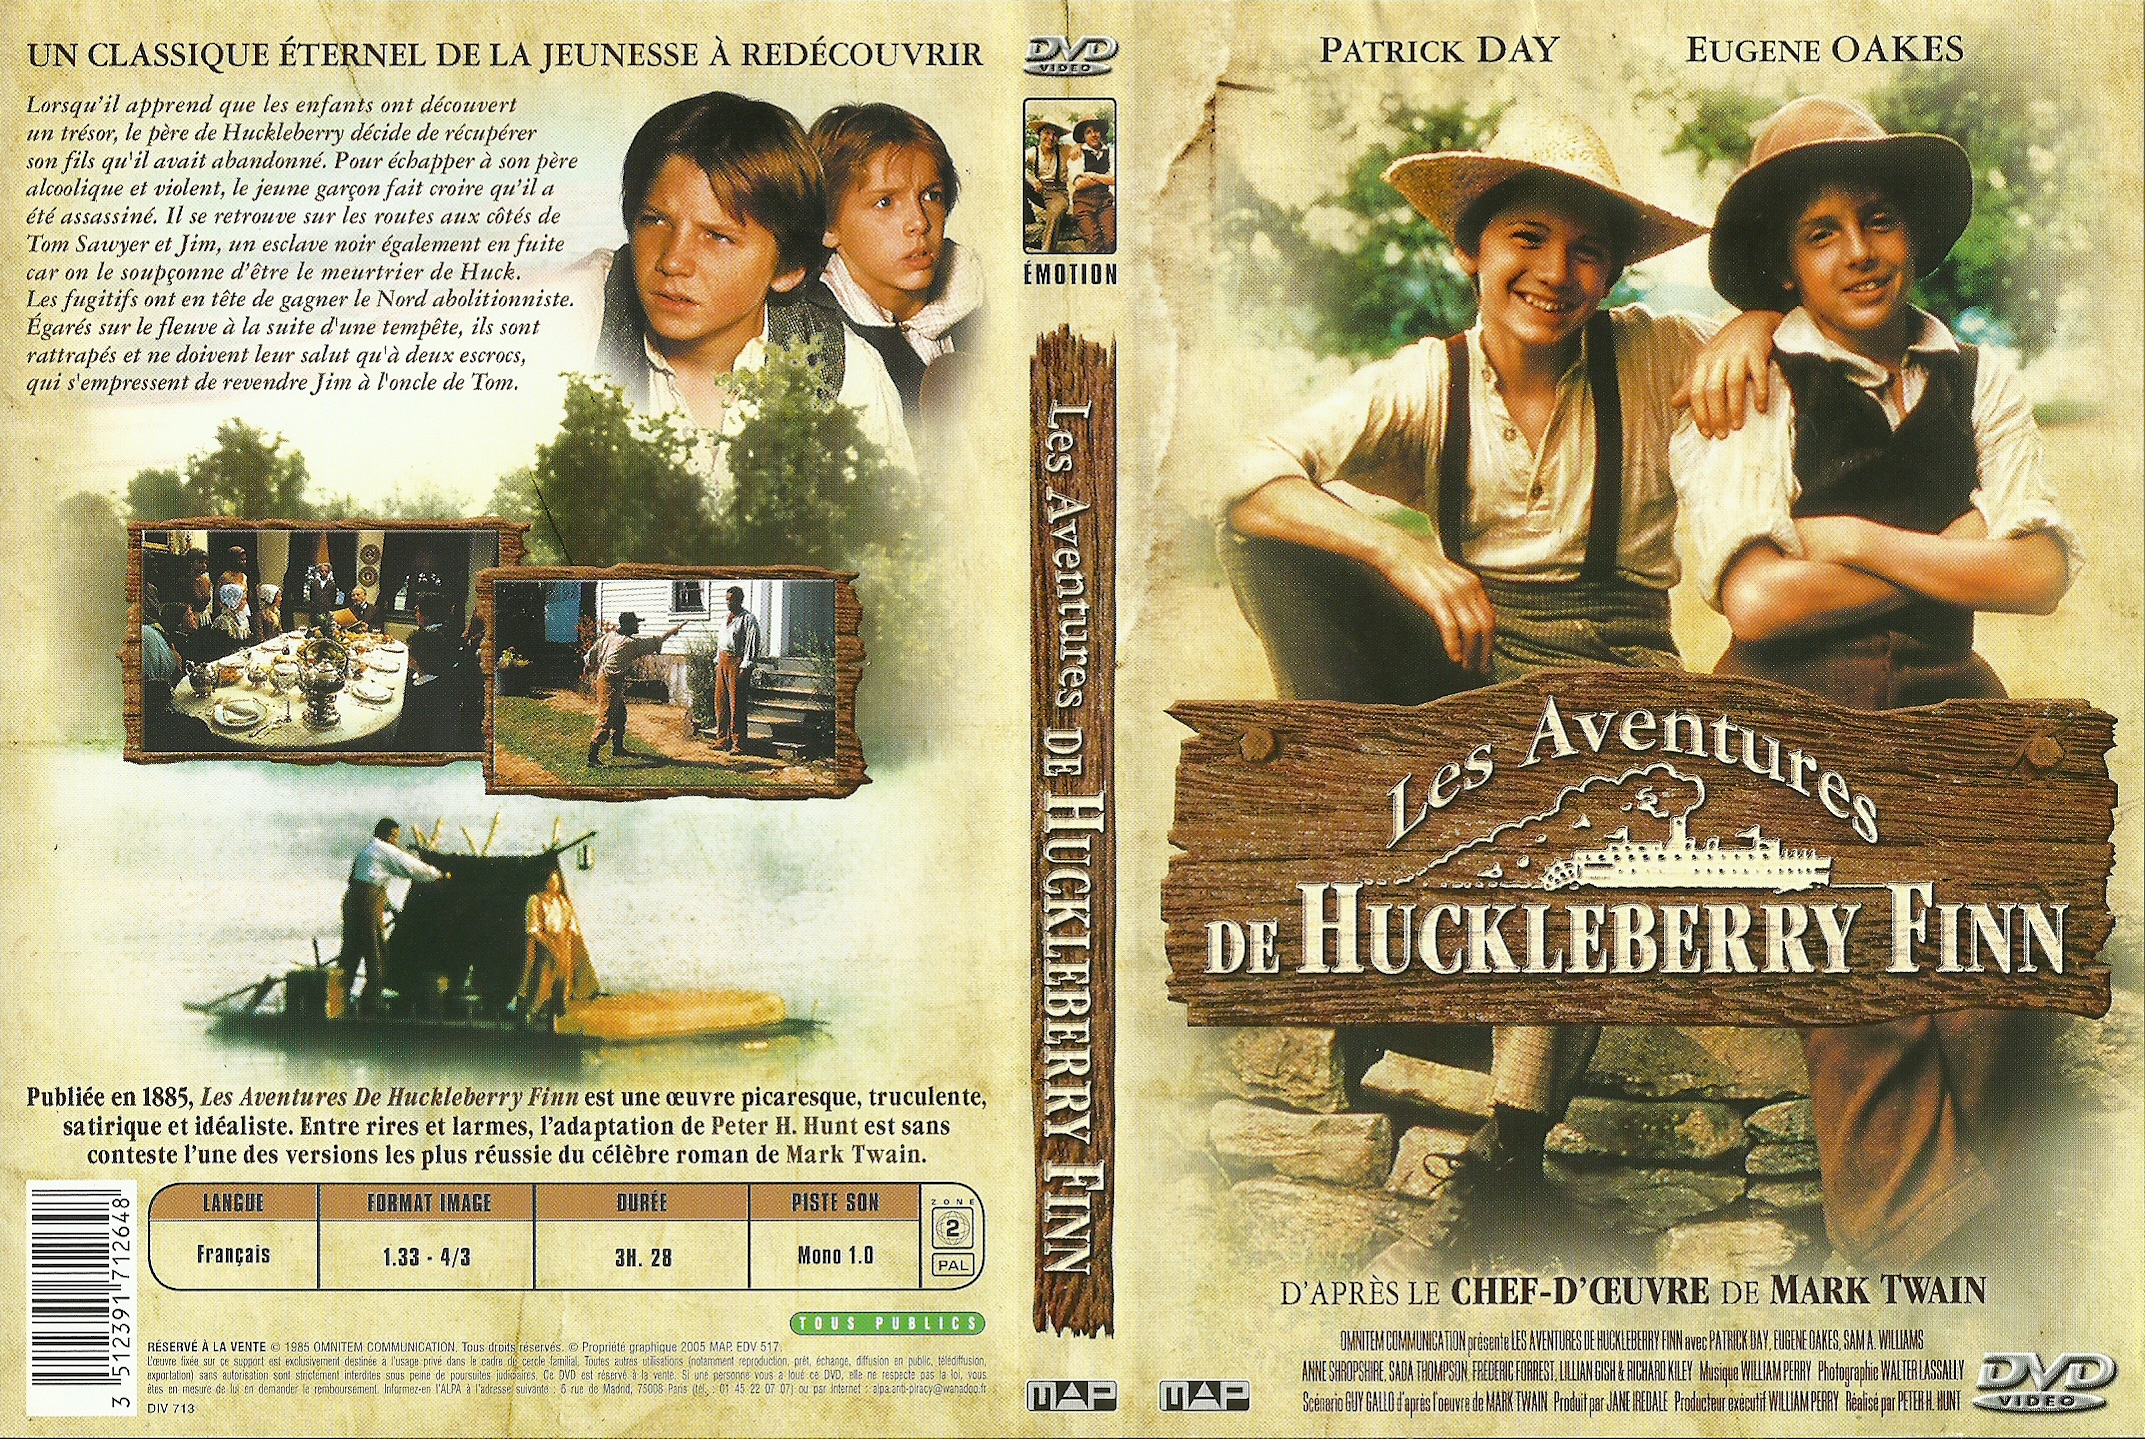 Jaquette DVD Les aventures de Huckleberry Finn (1985)